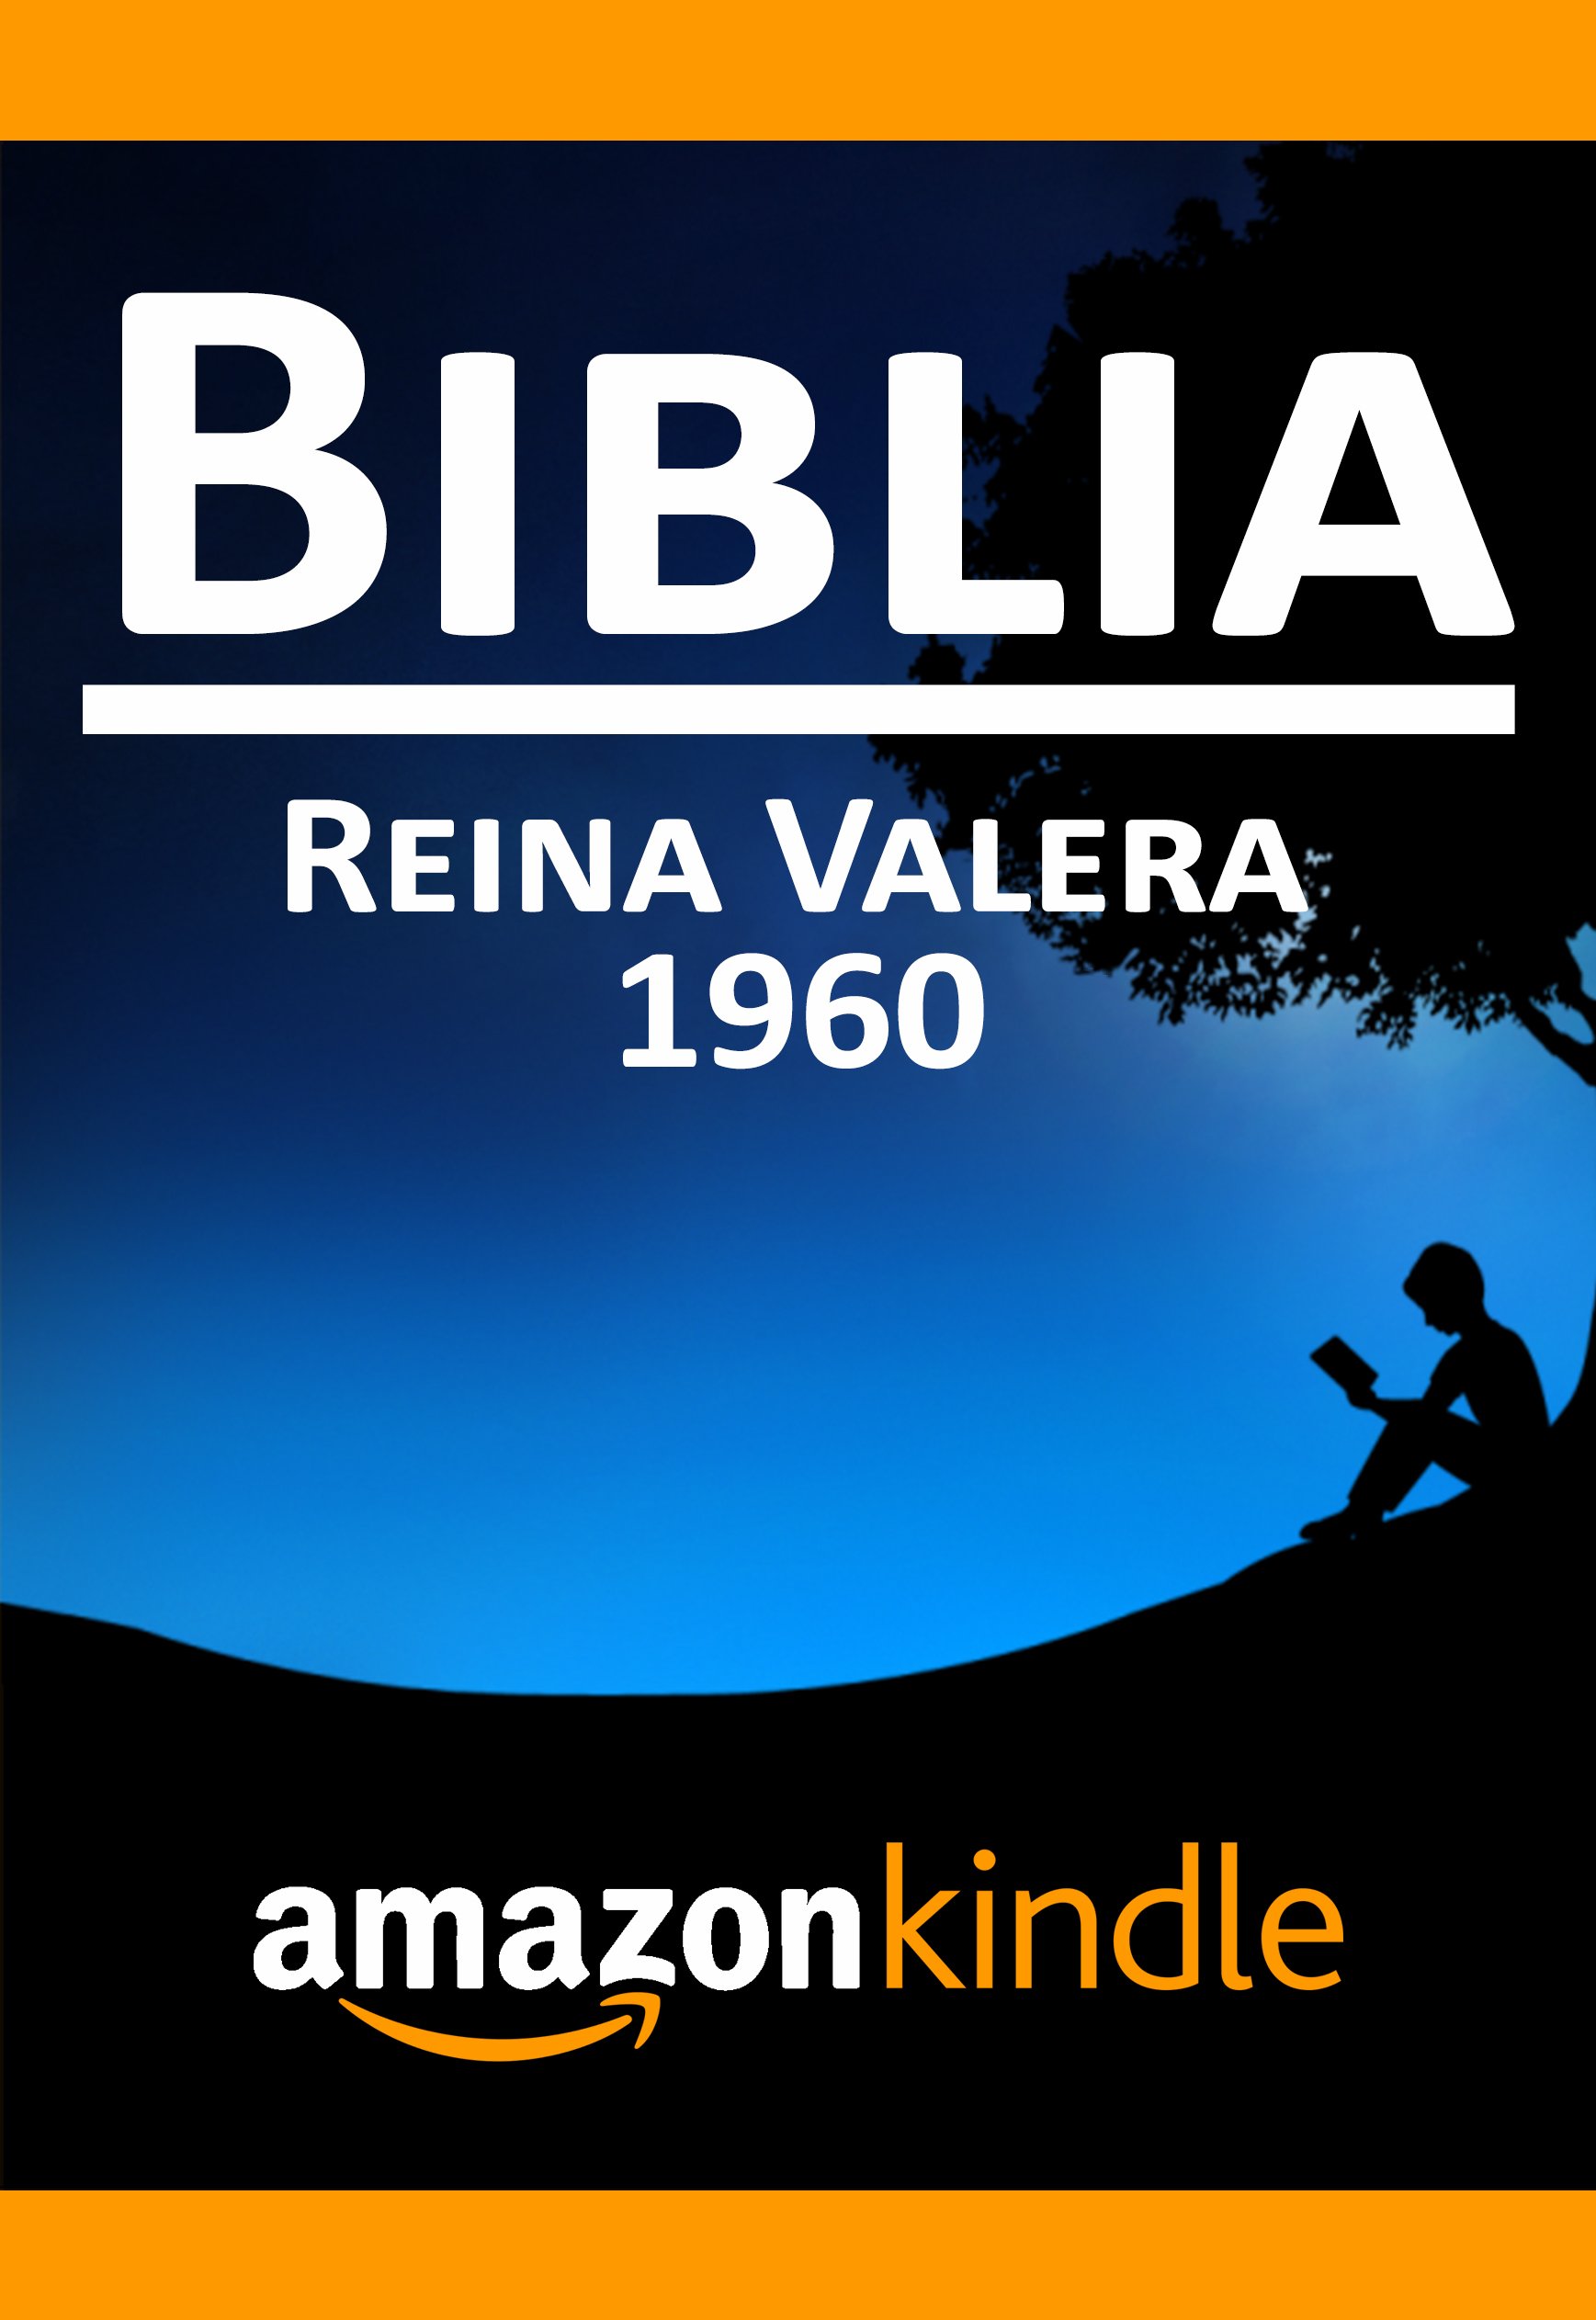 Biblia Reina Valera: 1960 Versión Digital: Biblia Reina Valera Formato Digital (Spanish Edition)